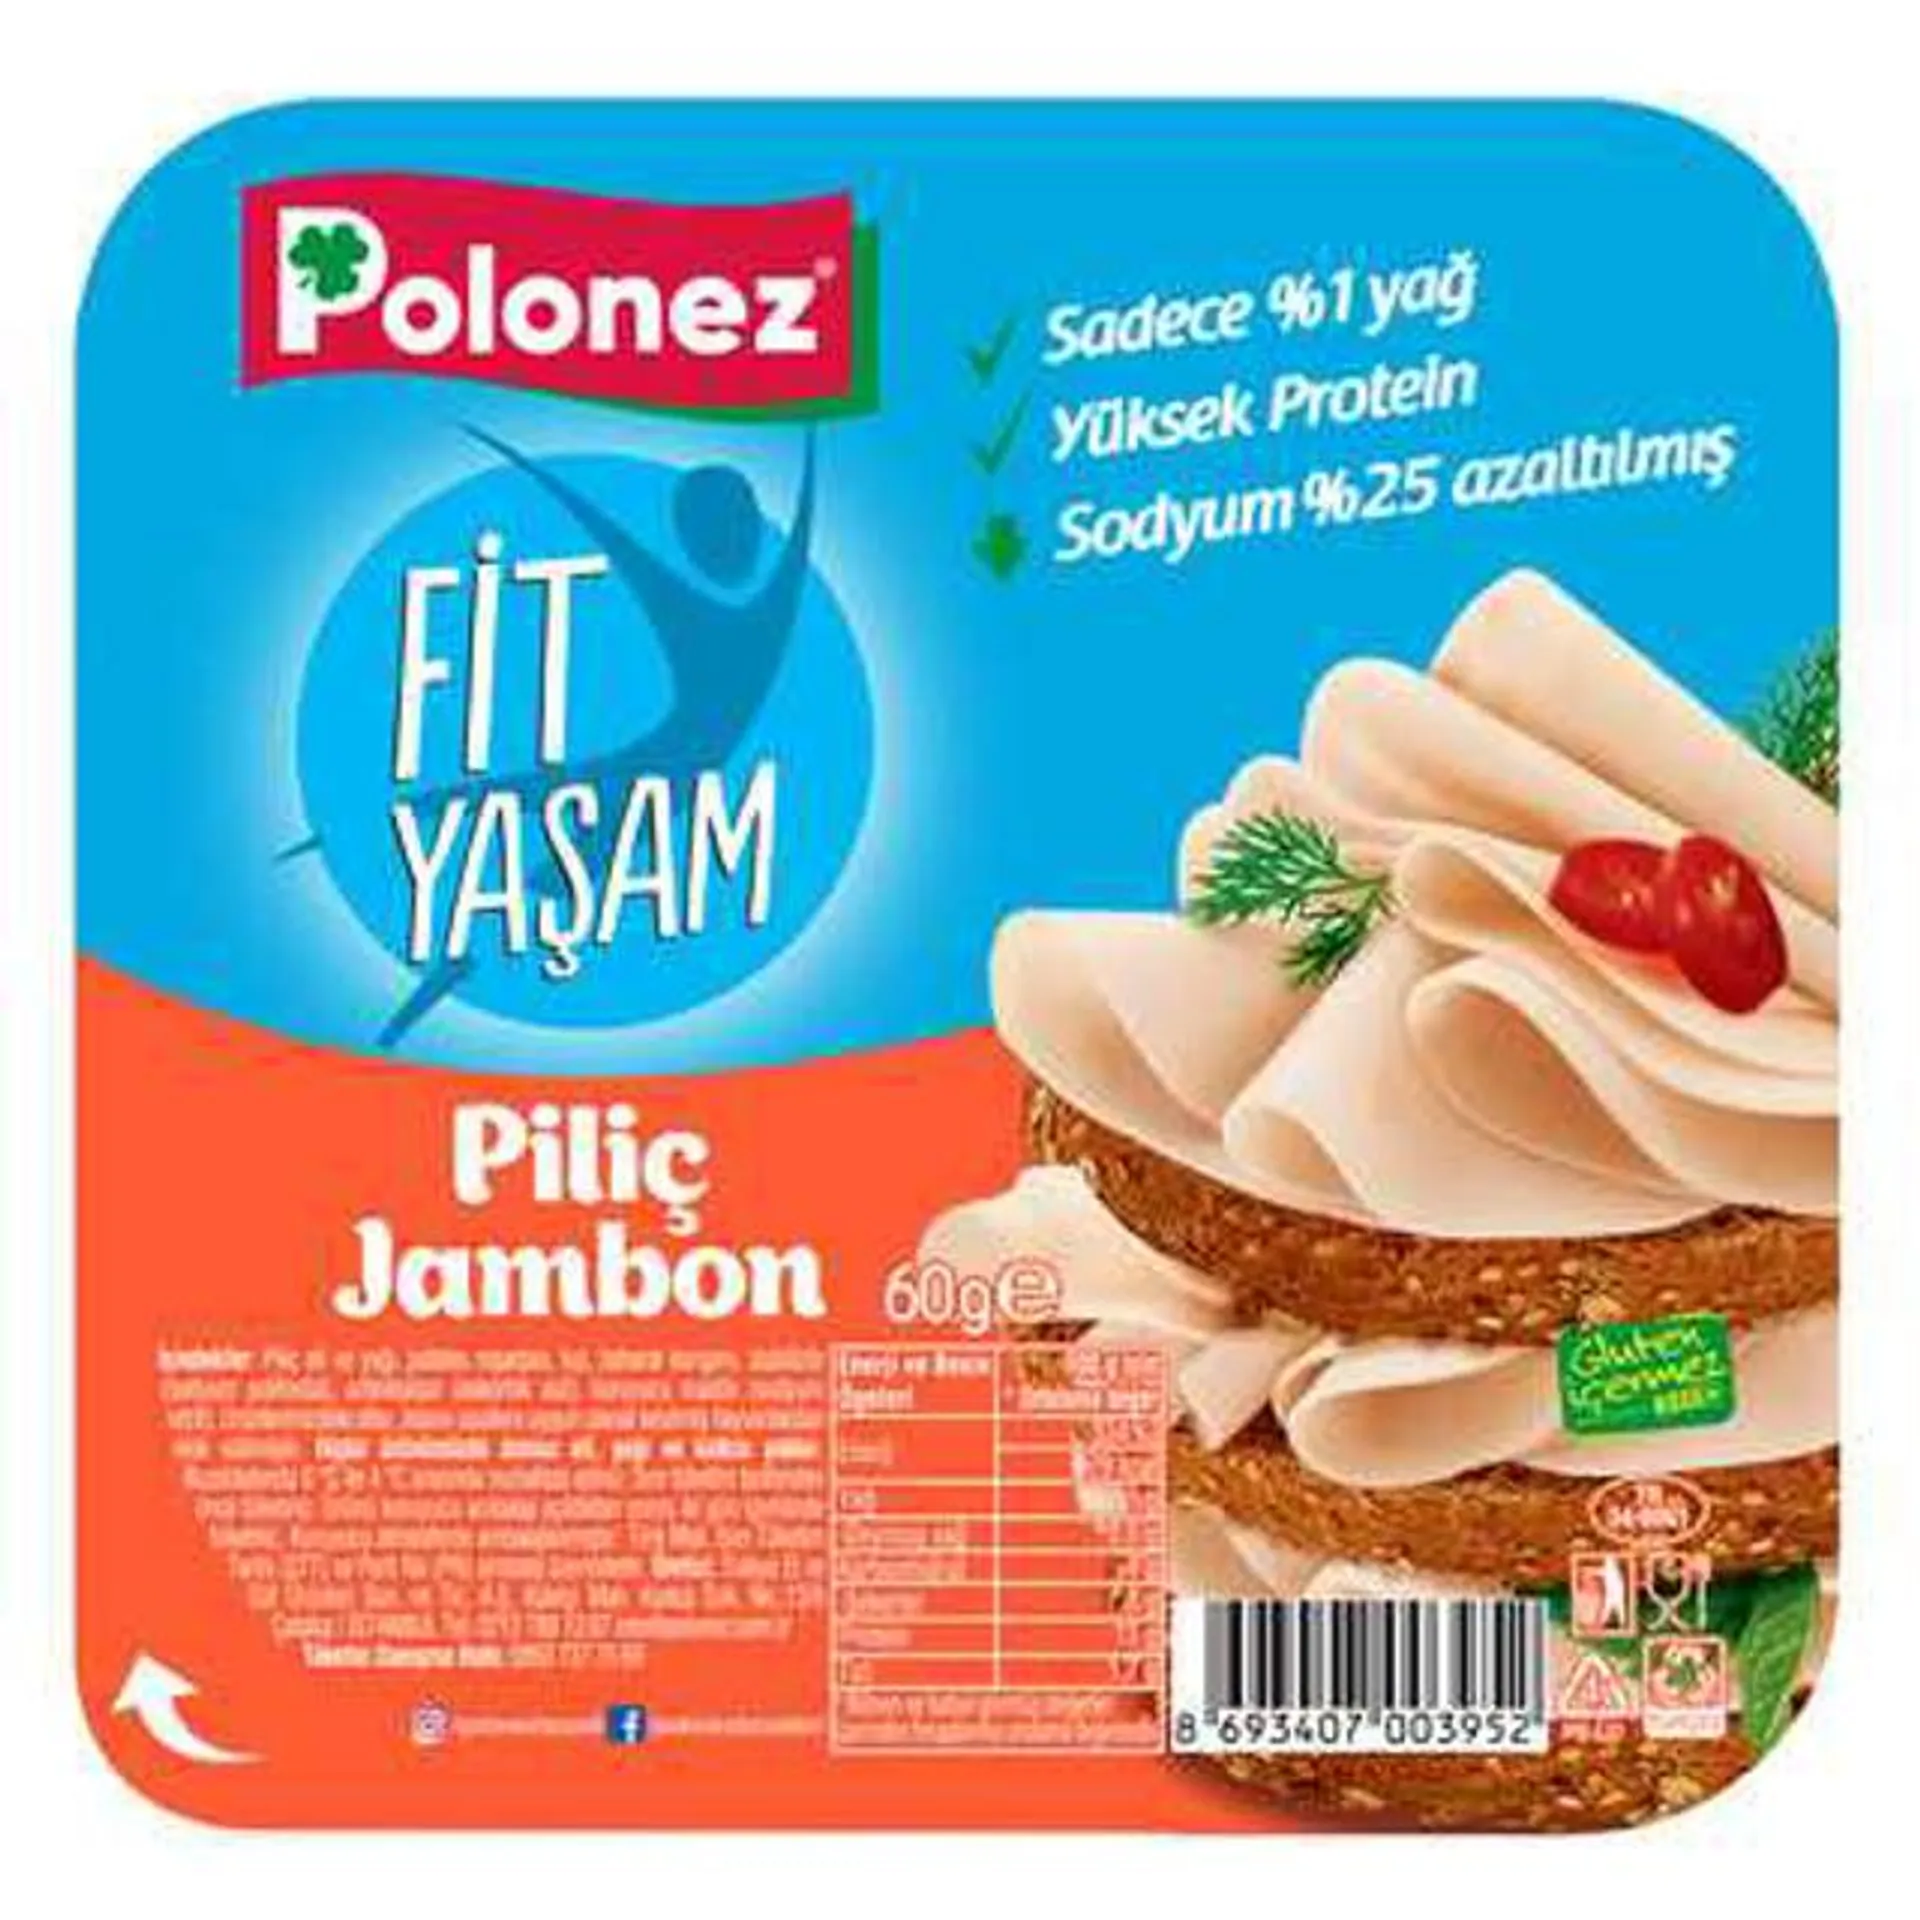 Polonez Pilic Jambon 60 Gr